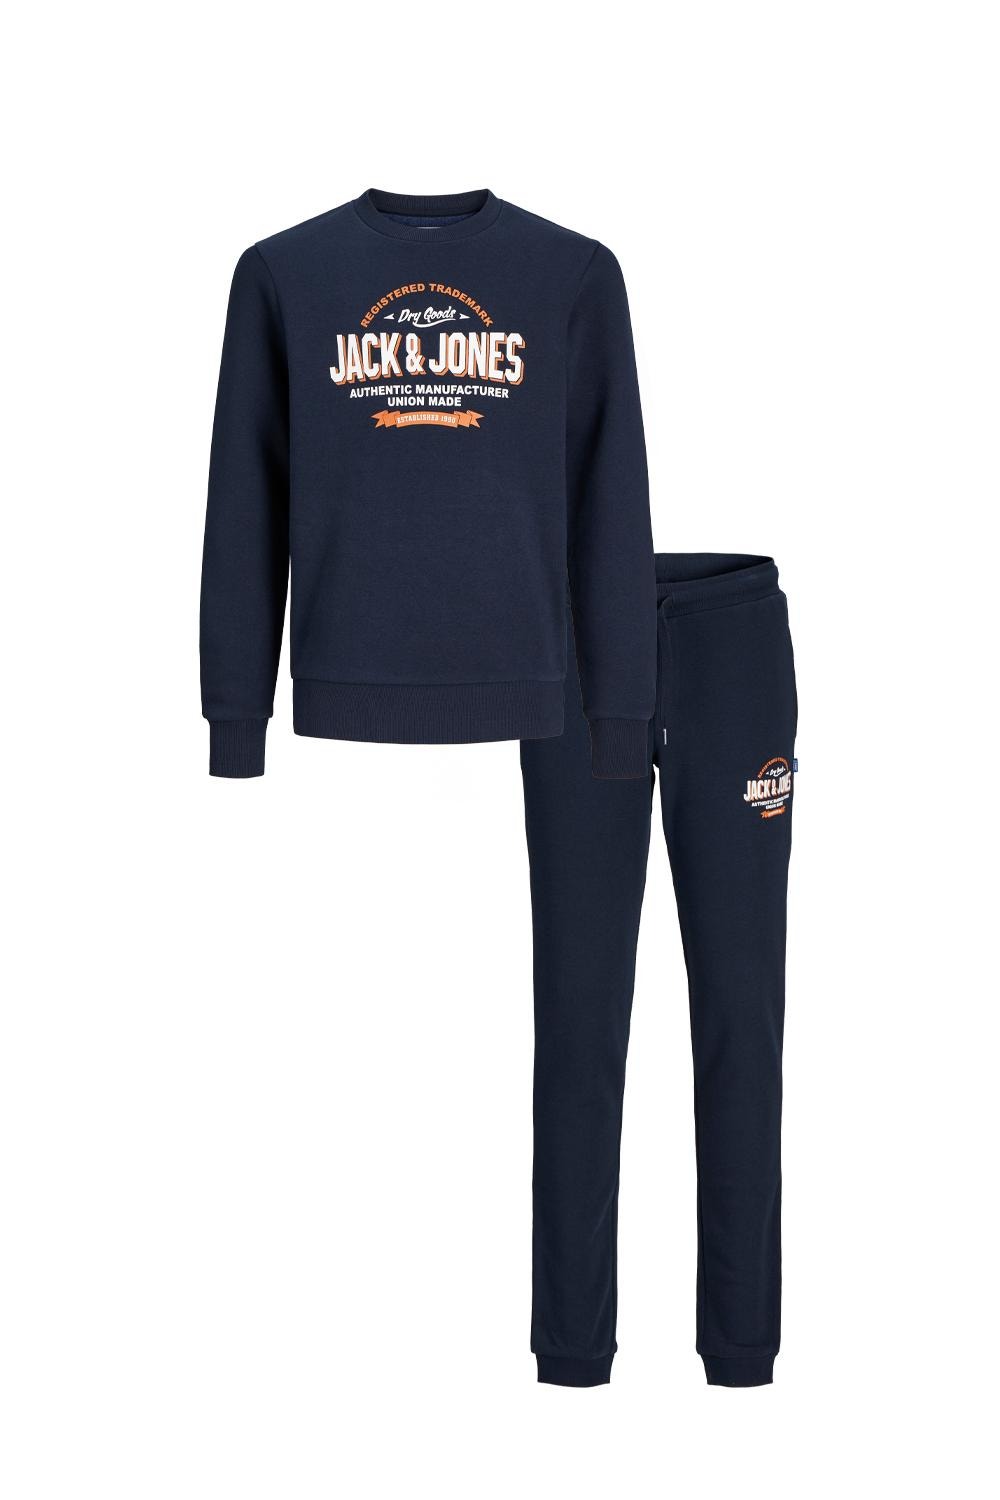 Jack & Jones Logo Sweatshirt Mini -Navy Blazer - 12267671